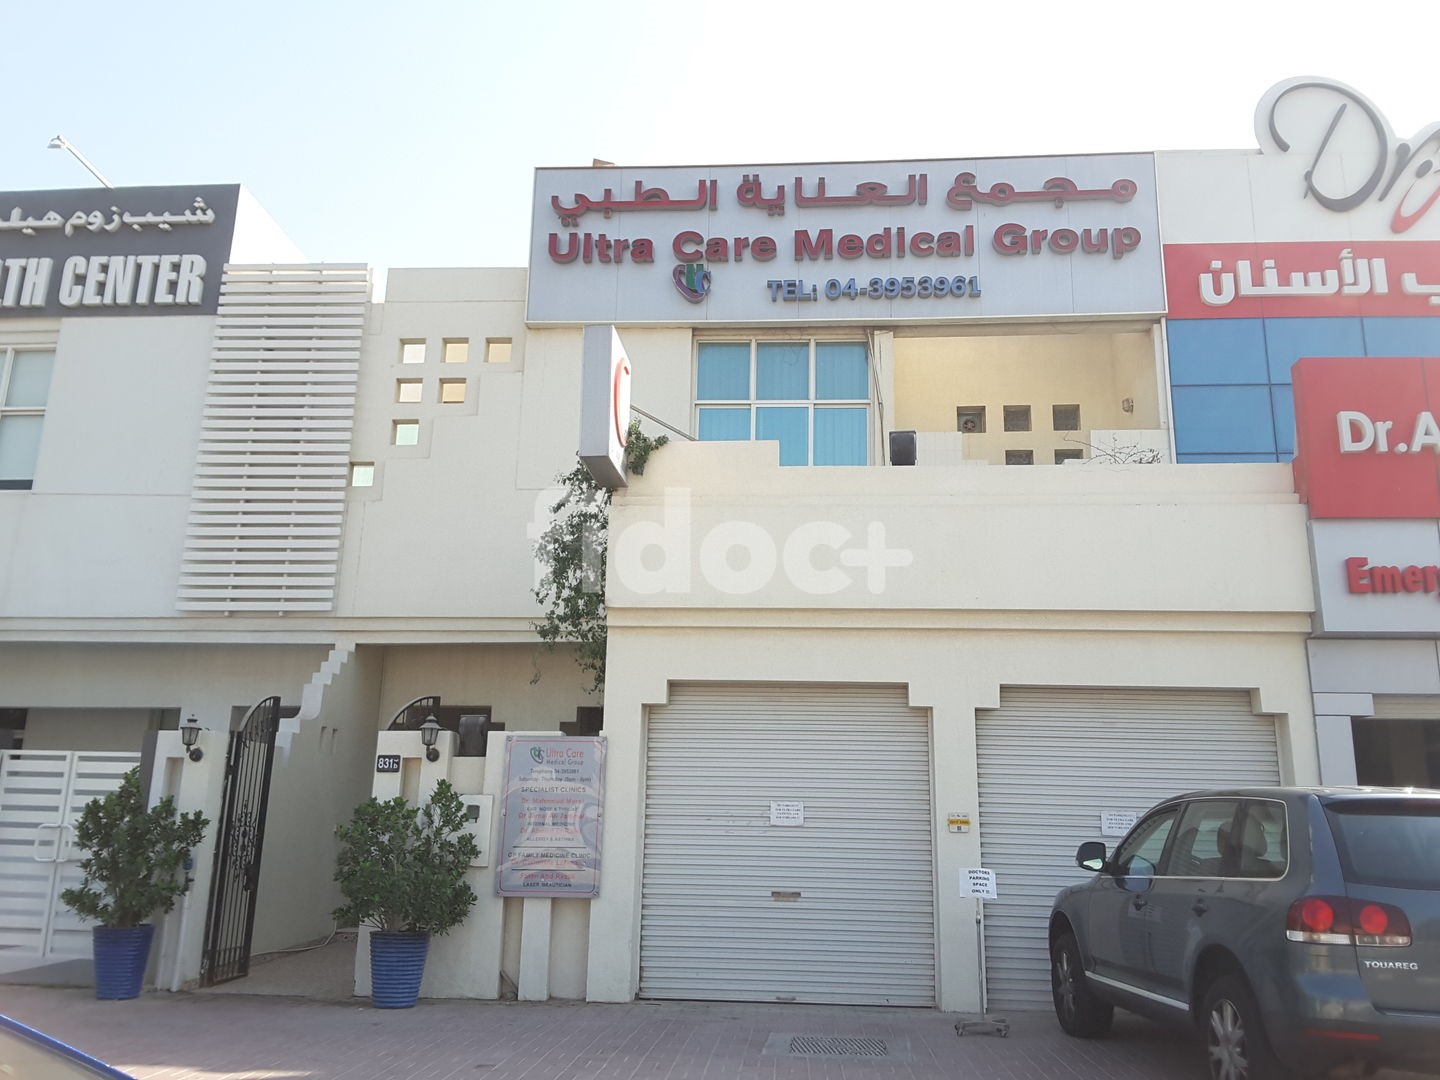 Ultra Care Medical Group, Dubai